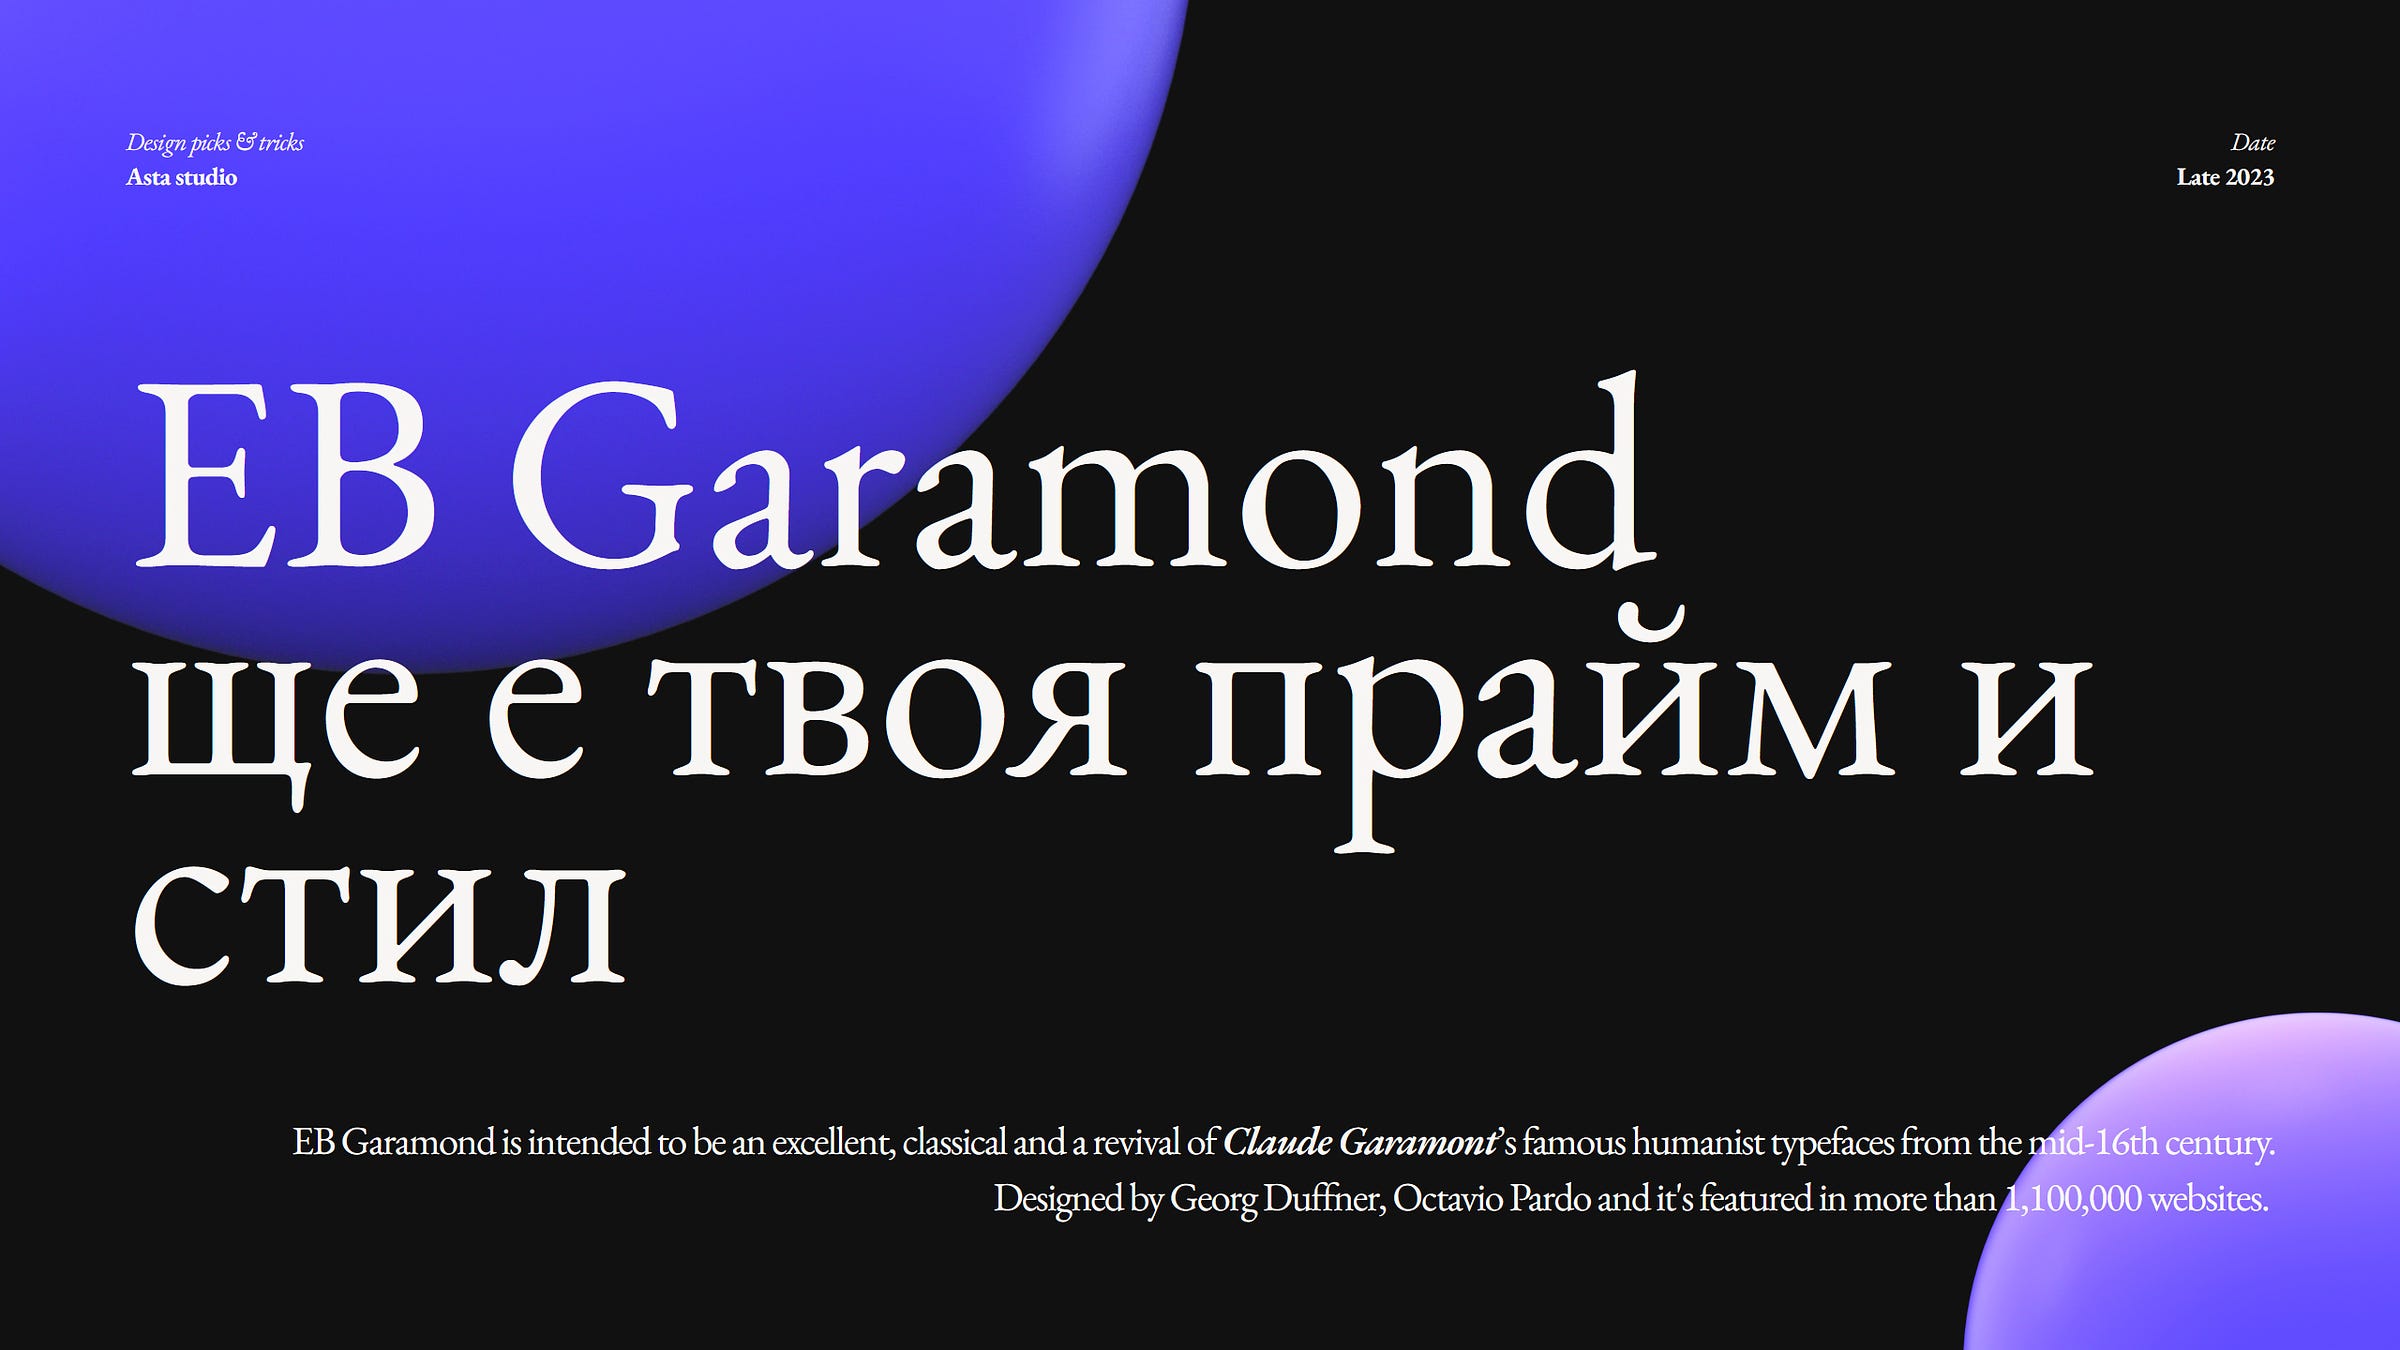 EB Garamond font family use example on a dark / black background